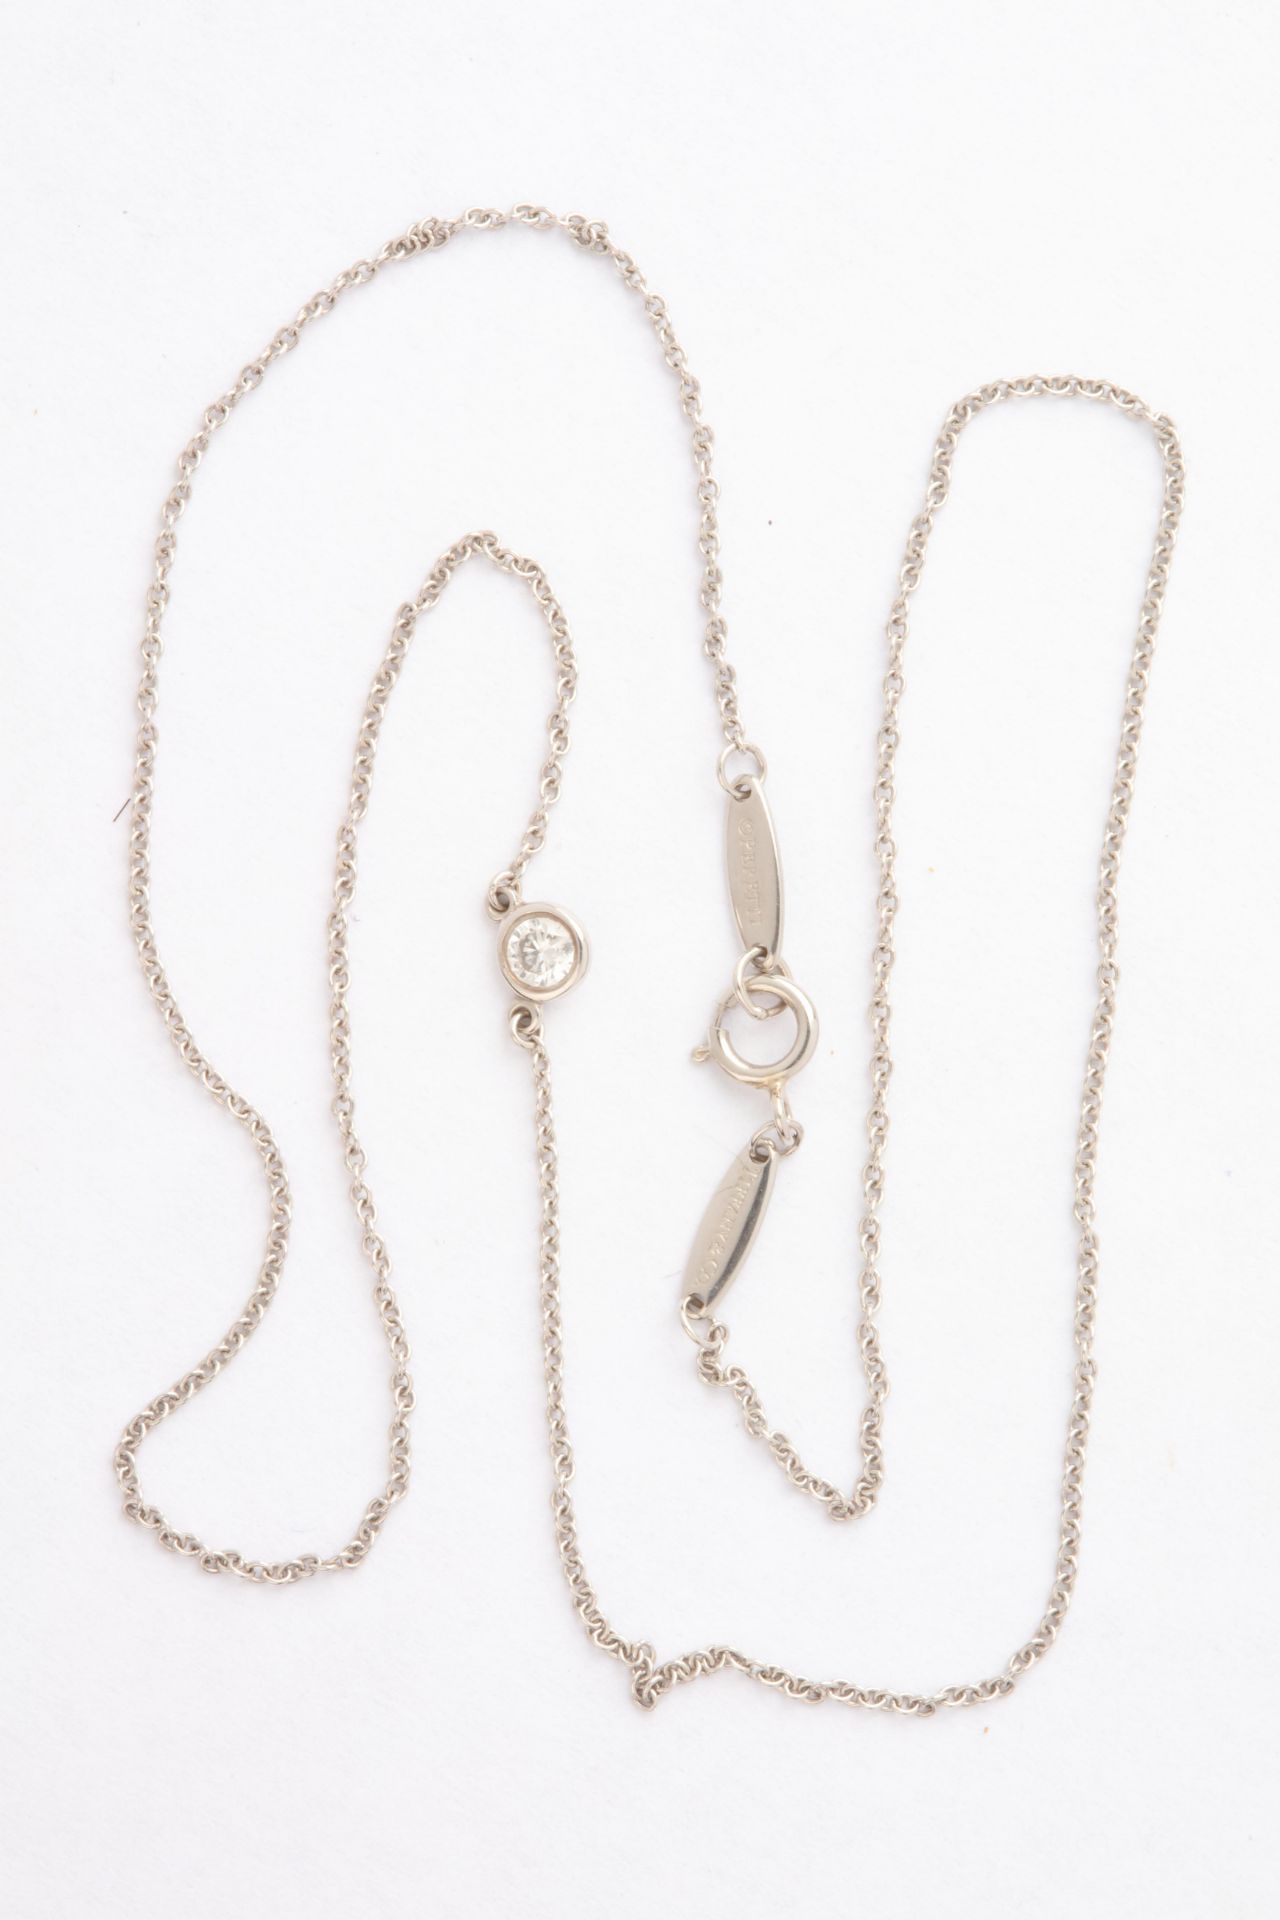 No VAT Tiffany & Co Elsa Peretti "Diamonds By The Yard" Single Diamond Necklace In Platinum - Image 2 of 3